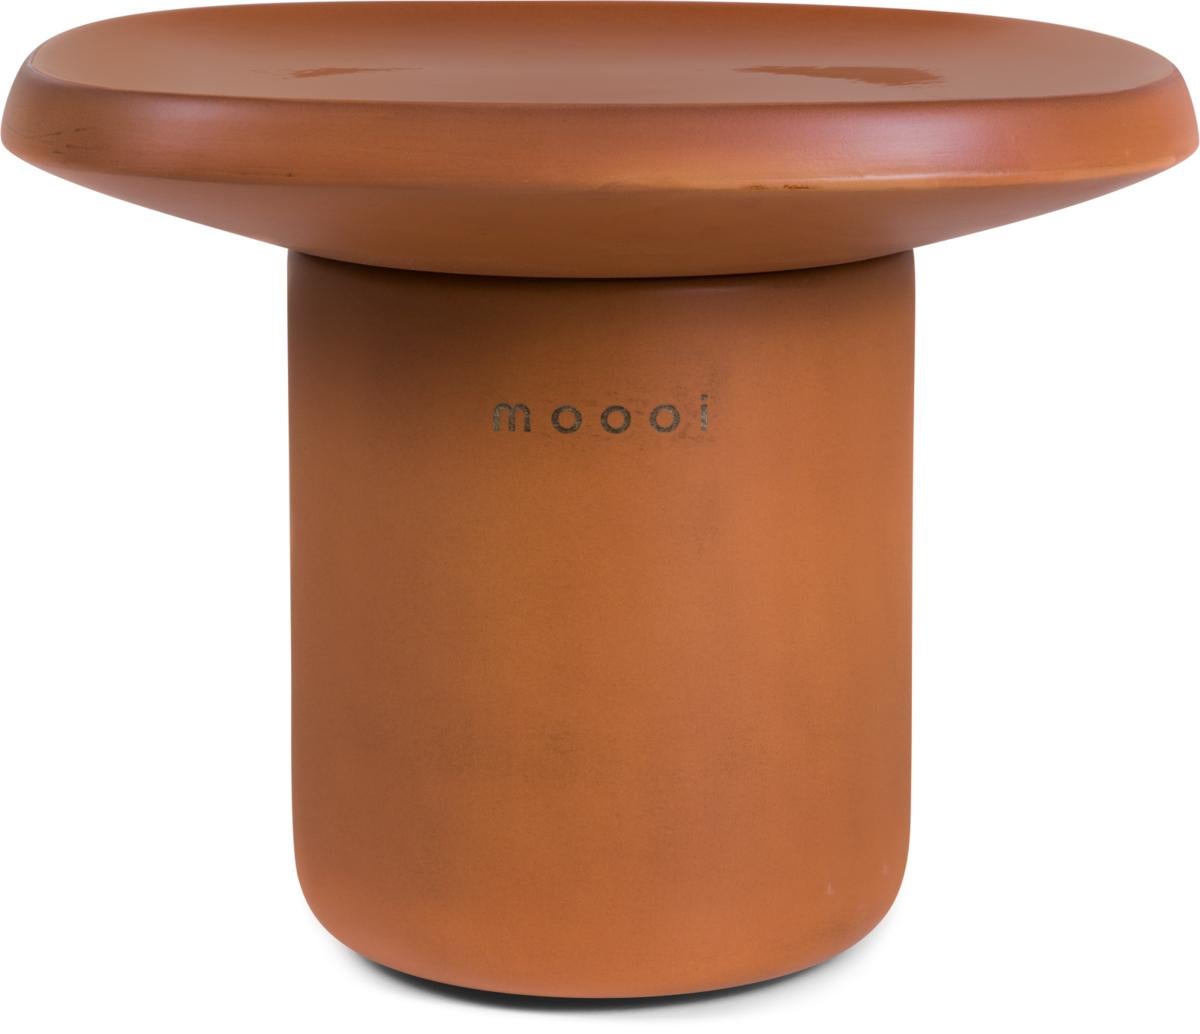 Moooi Obon Rectangular Low Ceramic Table in Grey Finish by Simone Bonanni For Sale 3